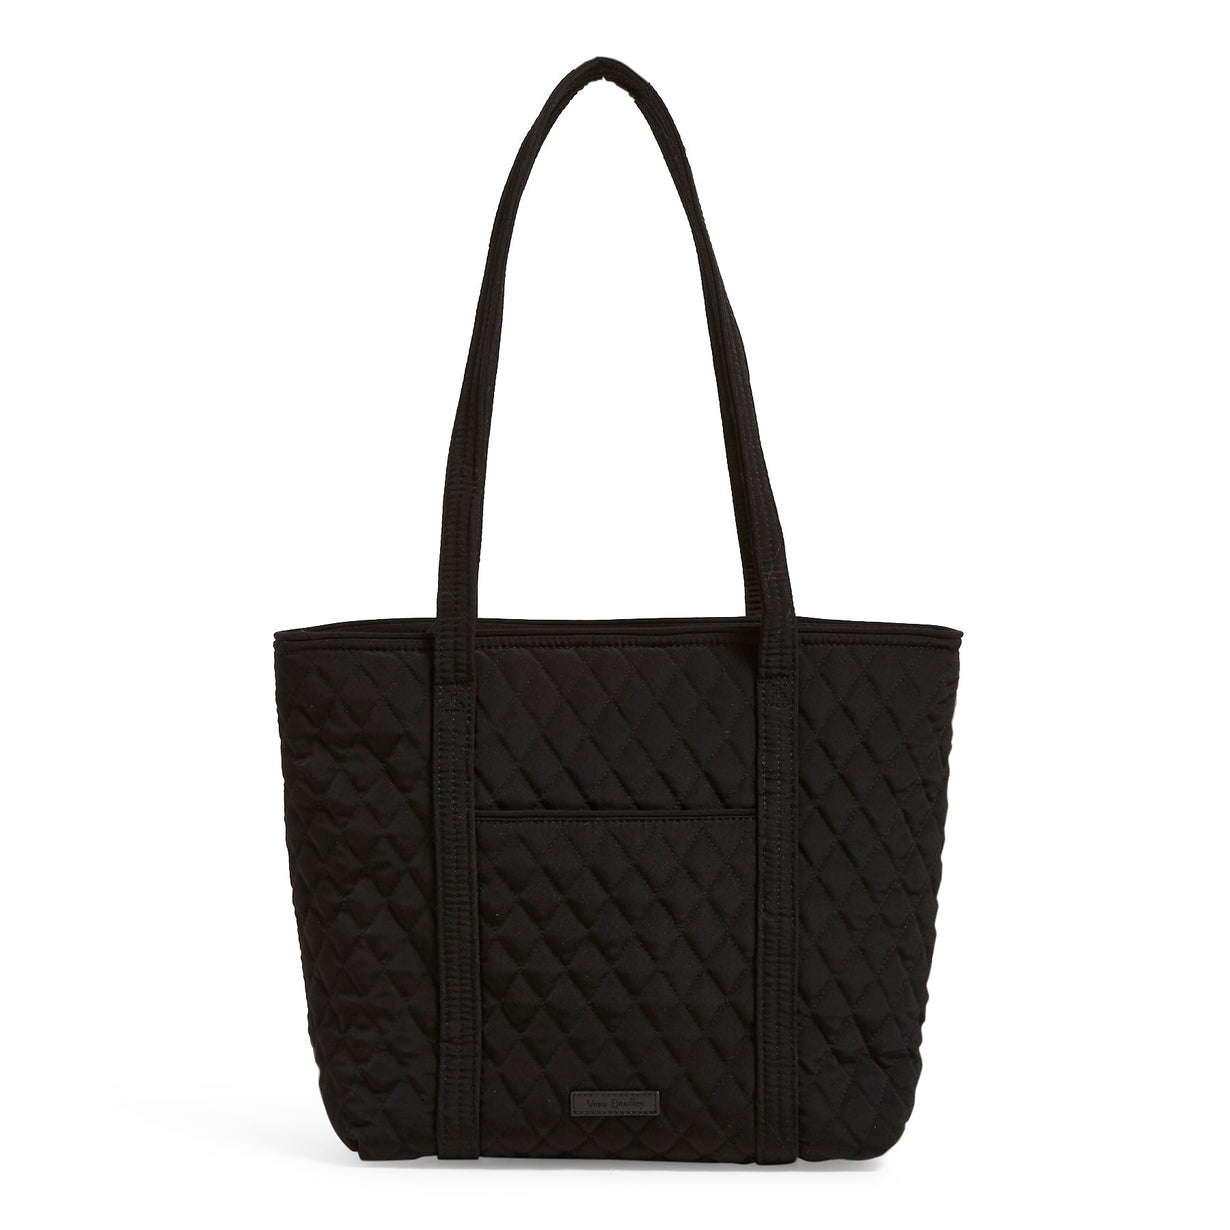 Vera Bradley Outlet | Black Small Vera Tote Bag – Vera Bradley Outlet Store